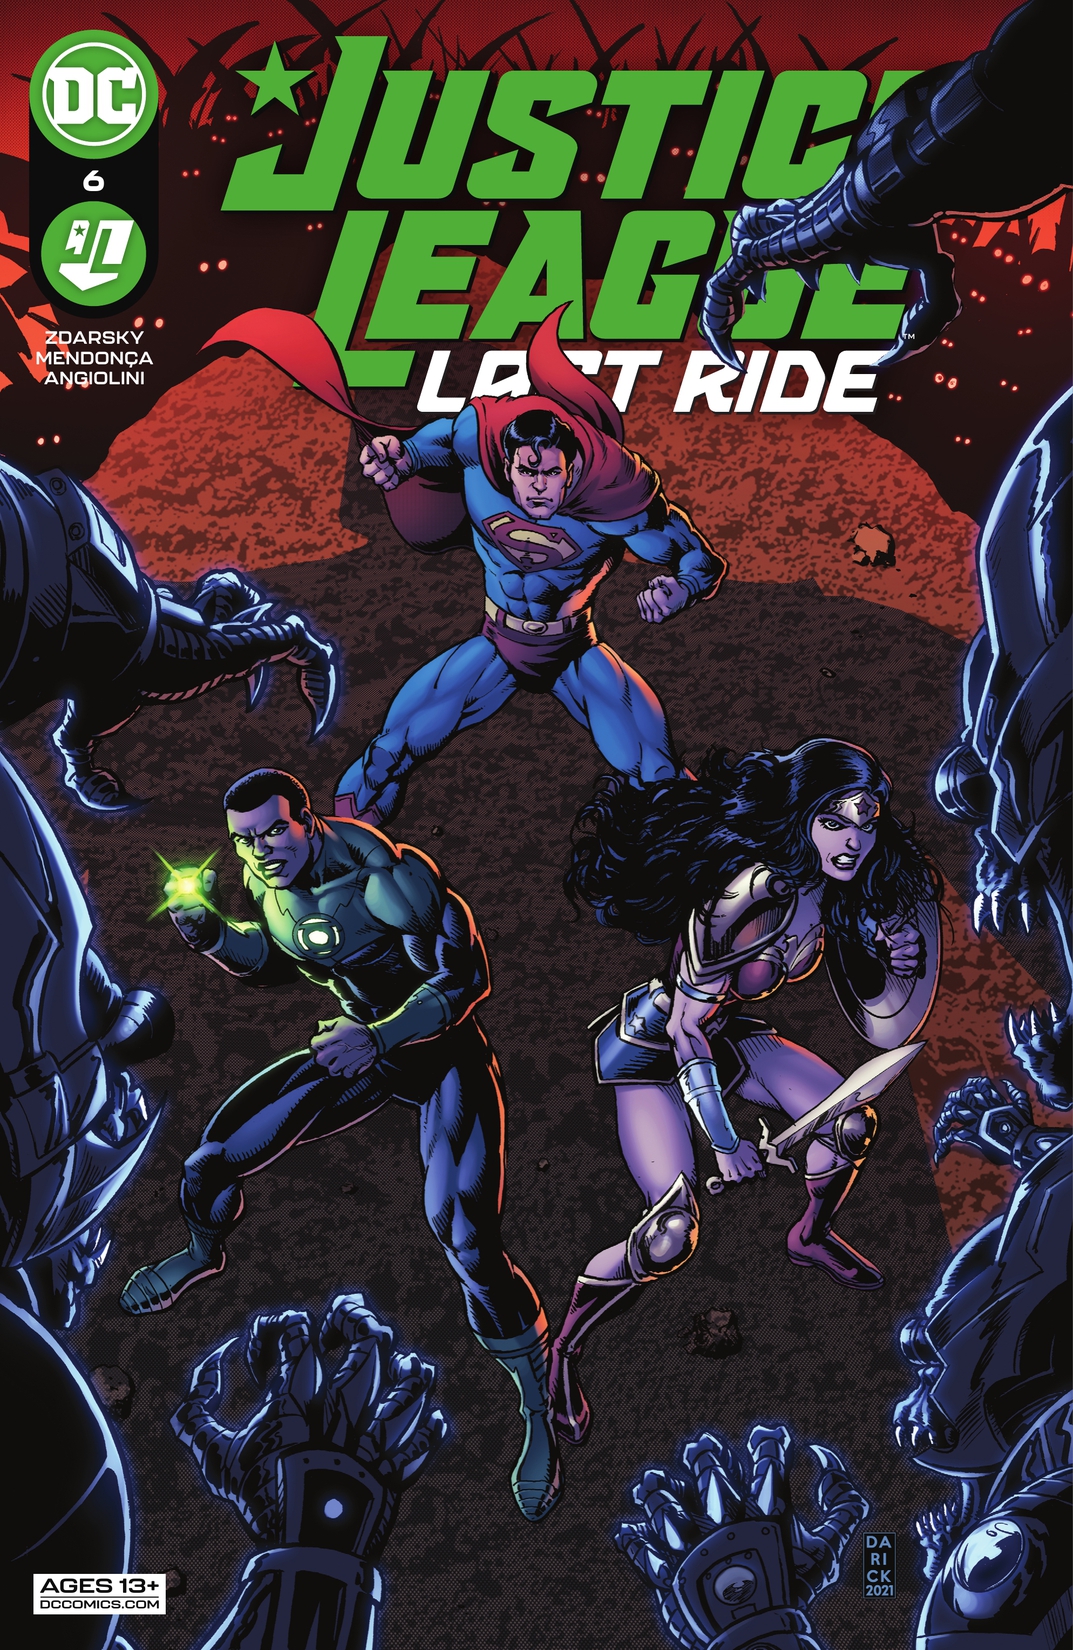 Justice League: Last Ride #6 preview images